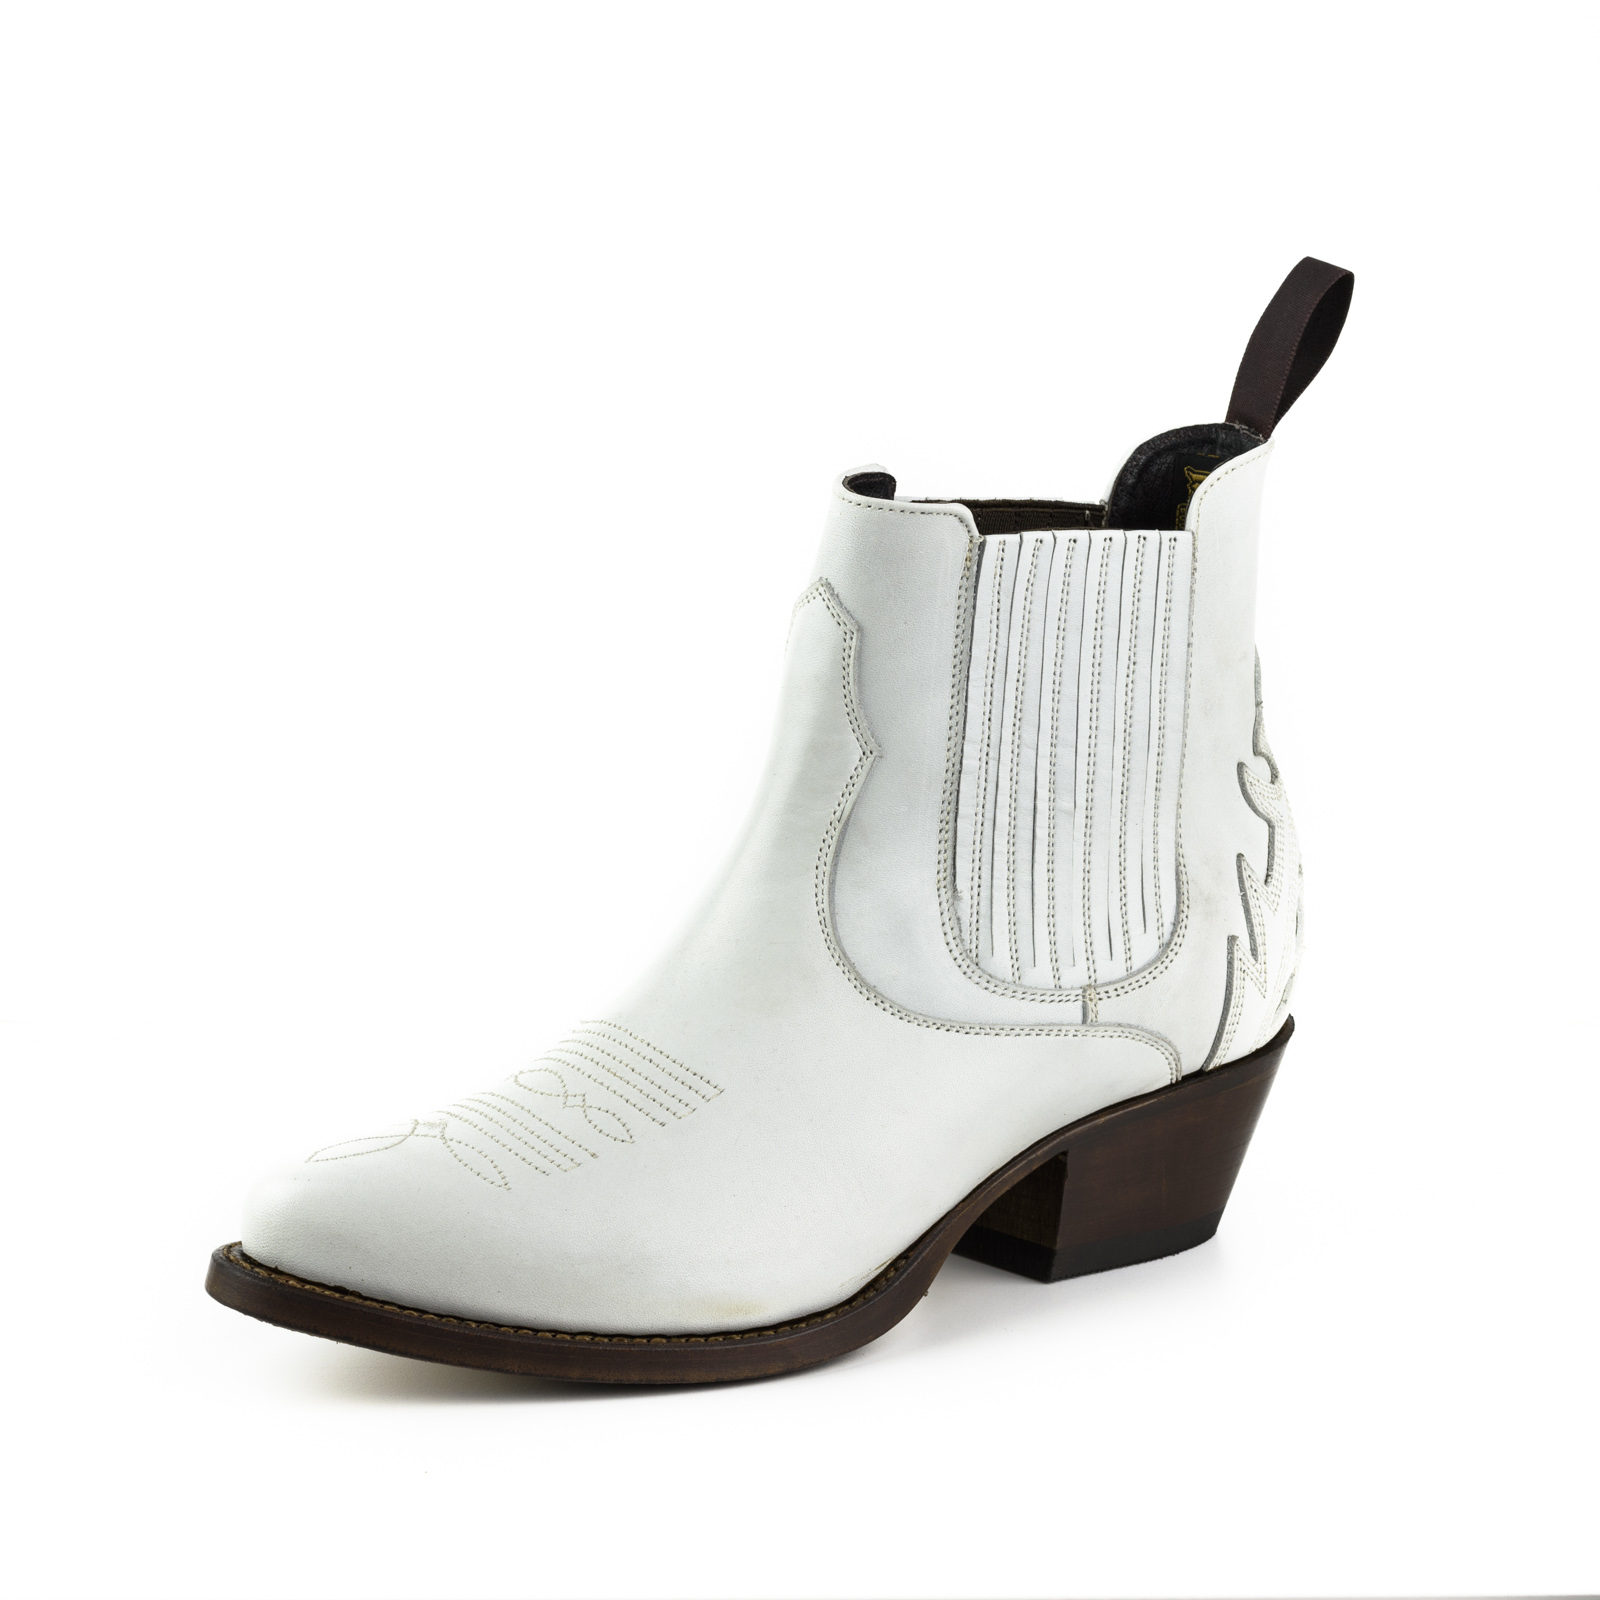 mayura-boots-modelo-marilyn-2487-blanco-1